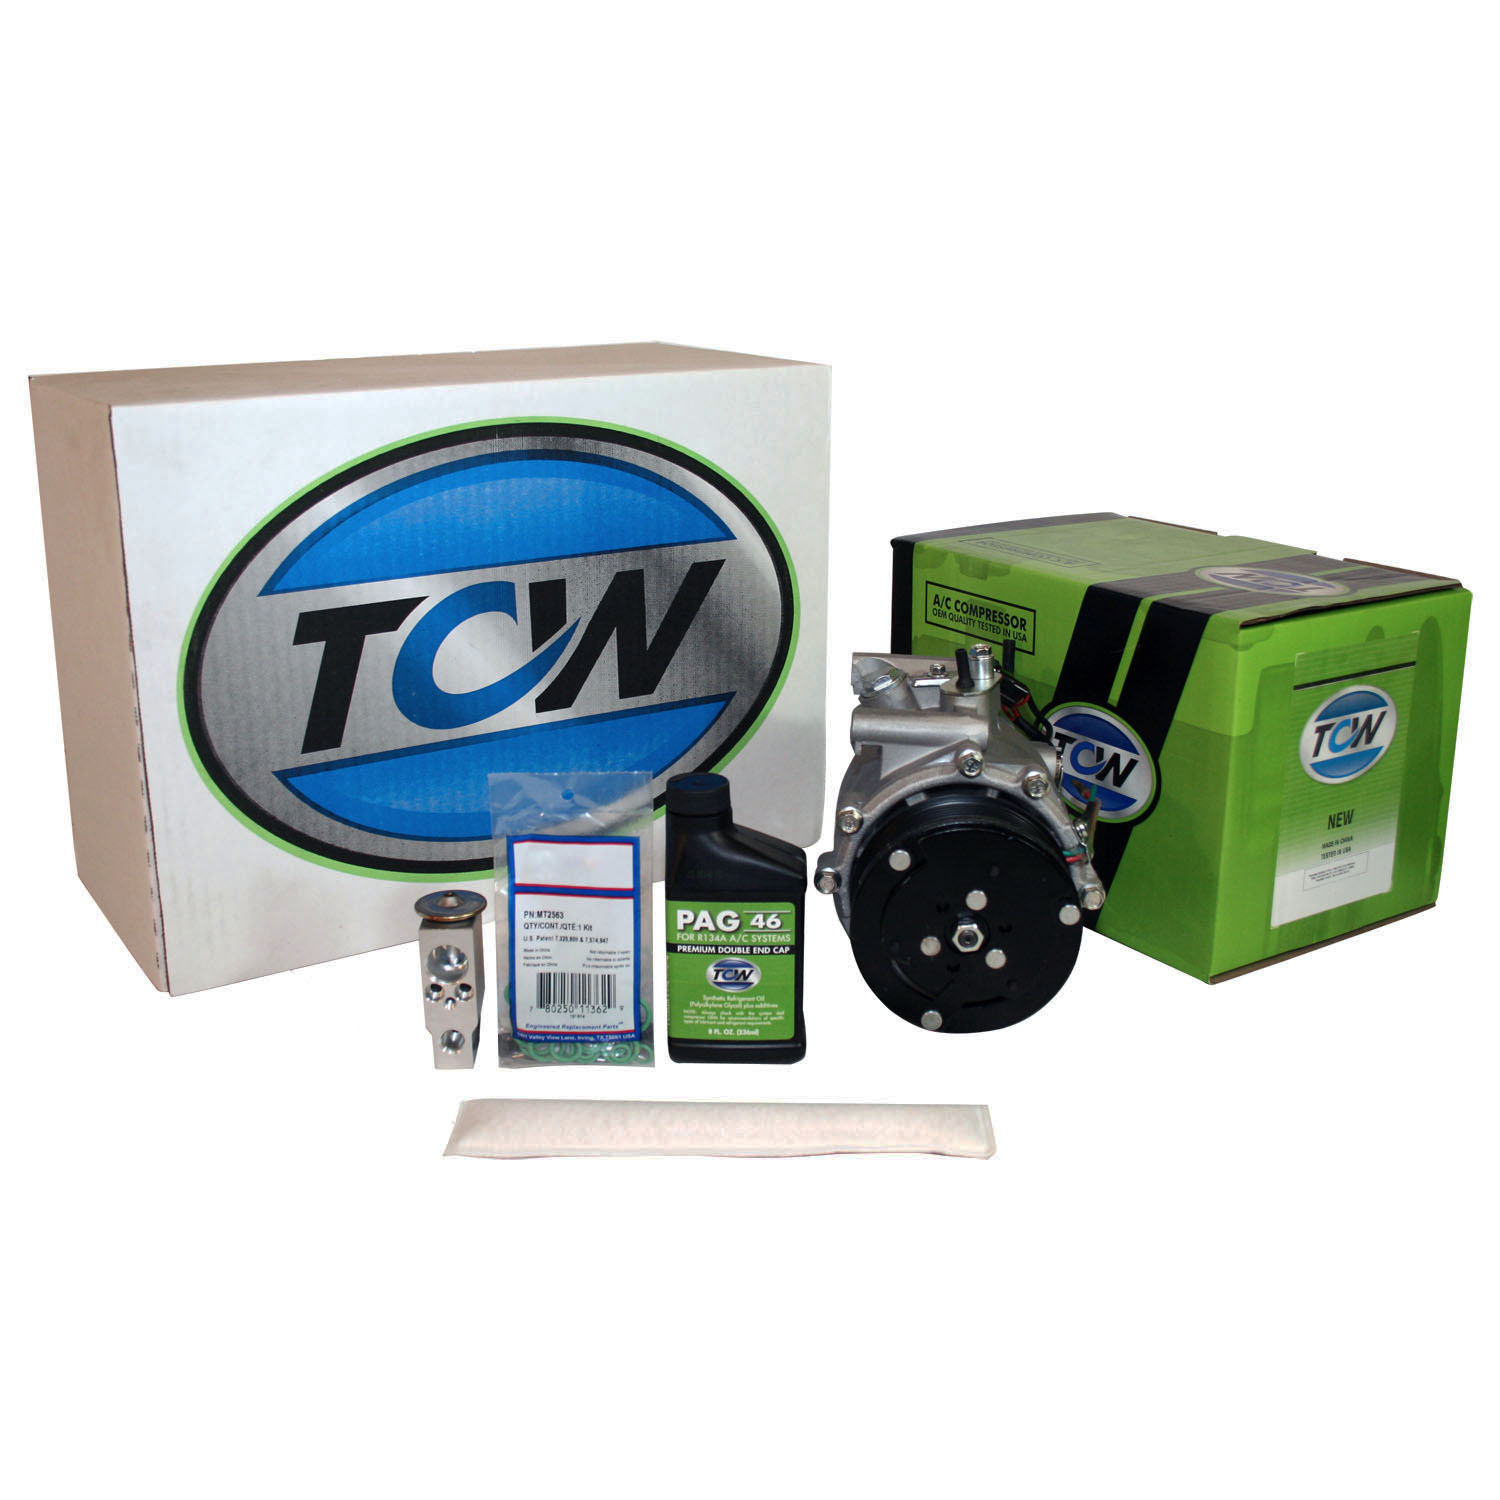 TCW Vehicle A/C Kit K1000482N New Product Image field_60b6a13a6e67c